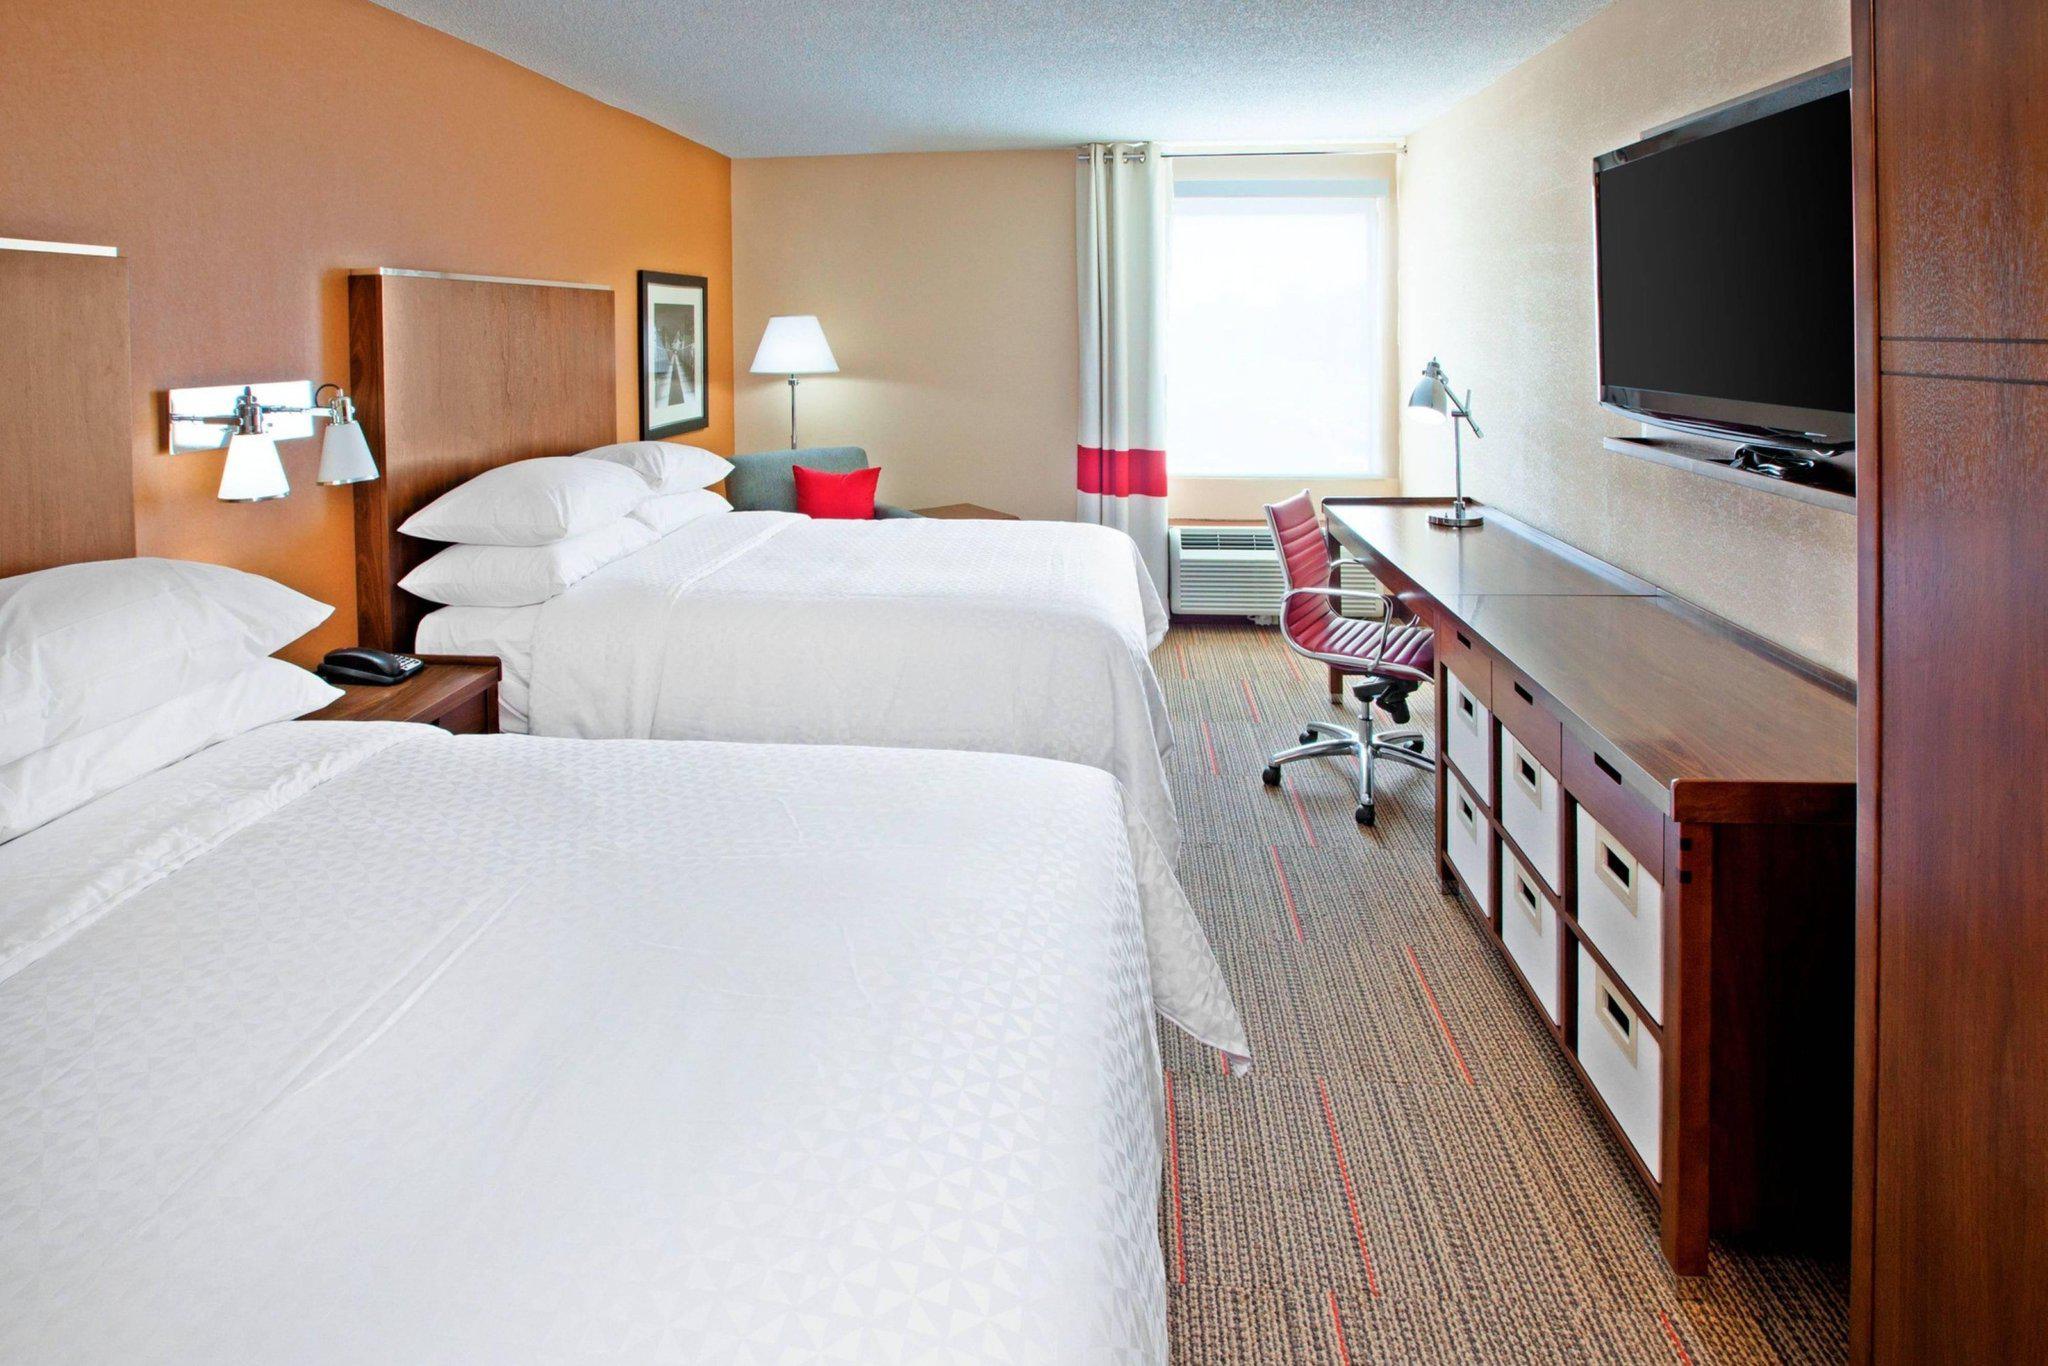 Fairfield Inn & Suites by Marriott Chattanooga Photo